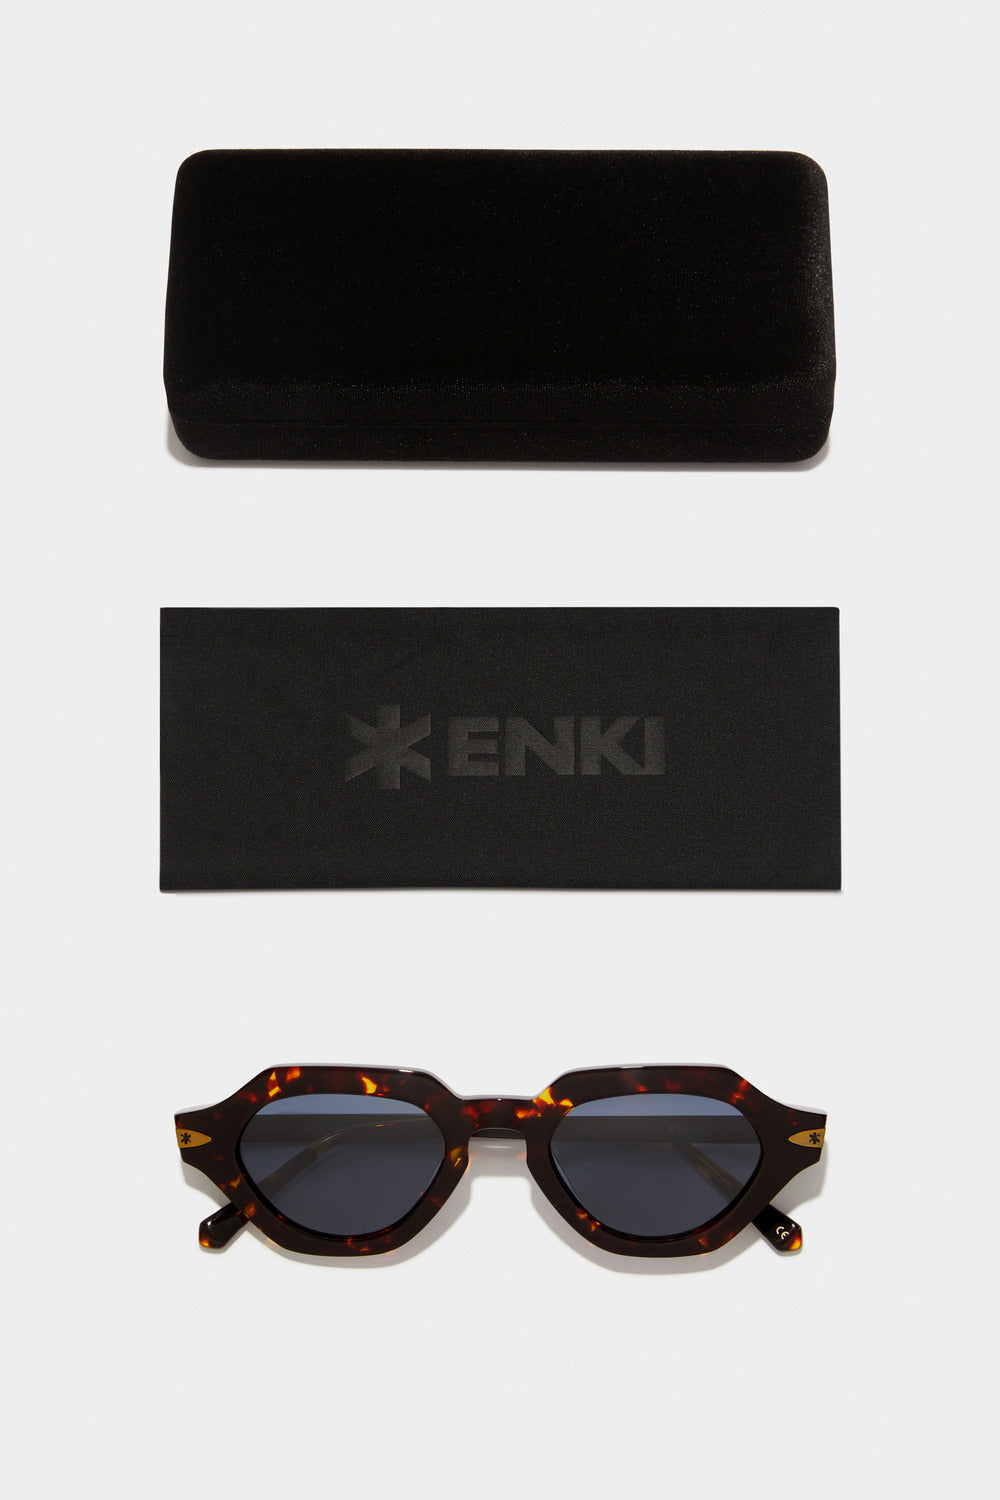 www.enkieyewear.com Hippias Men’s and Women’s Sunglasses